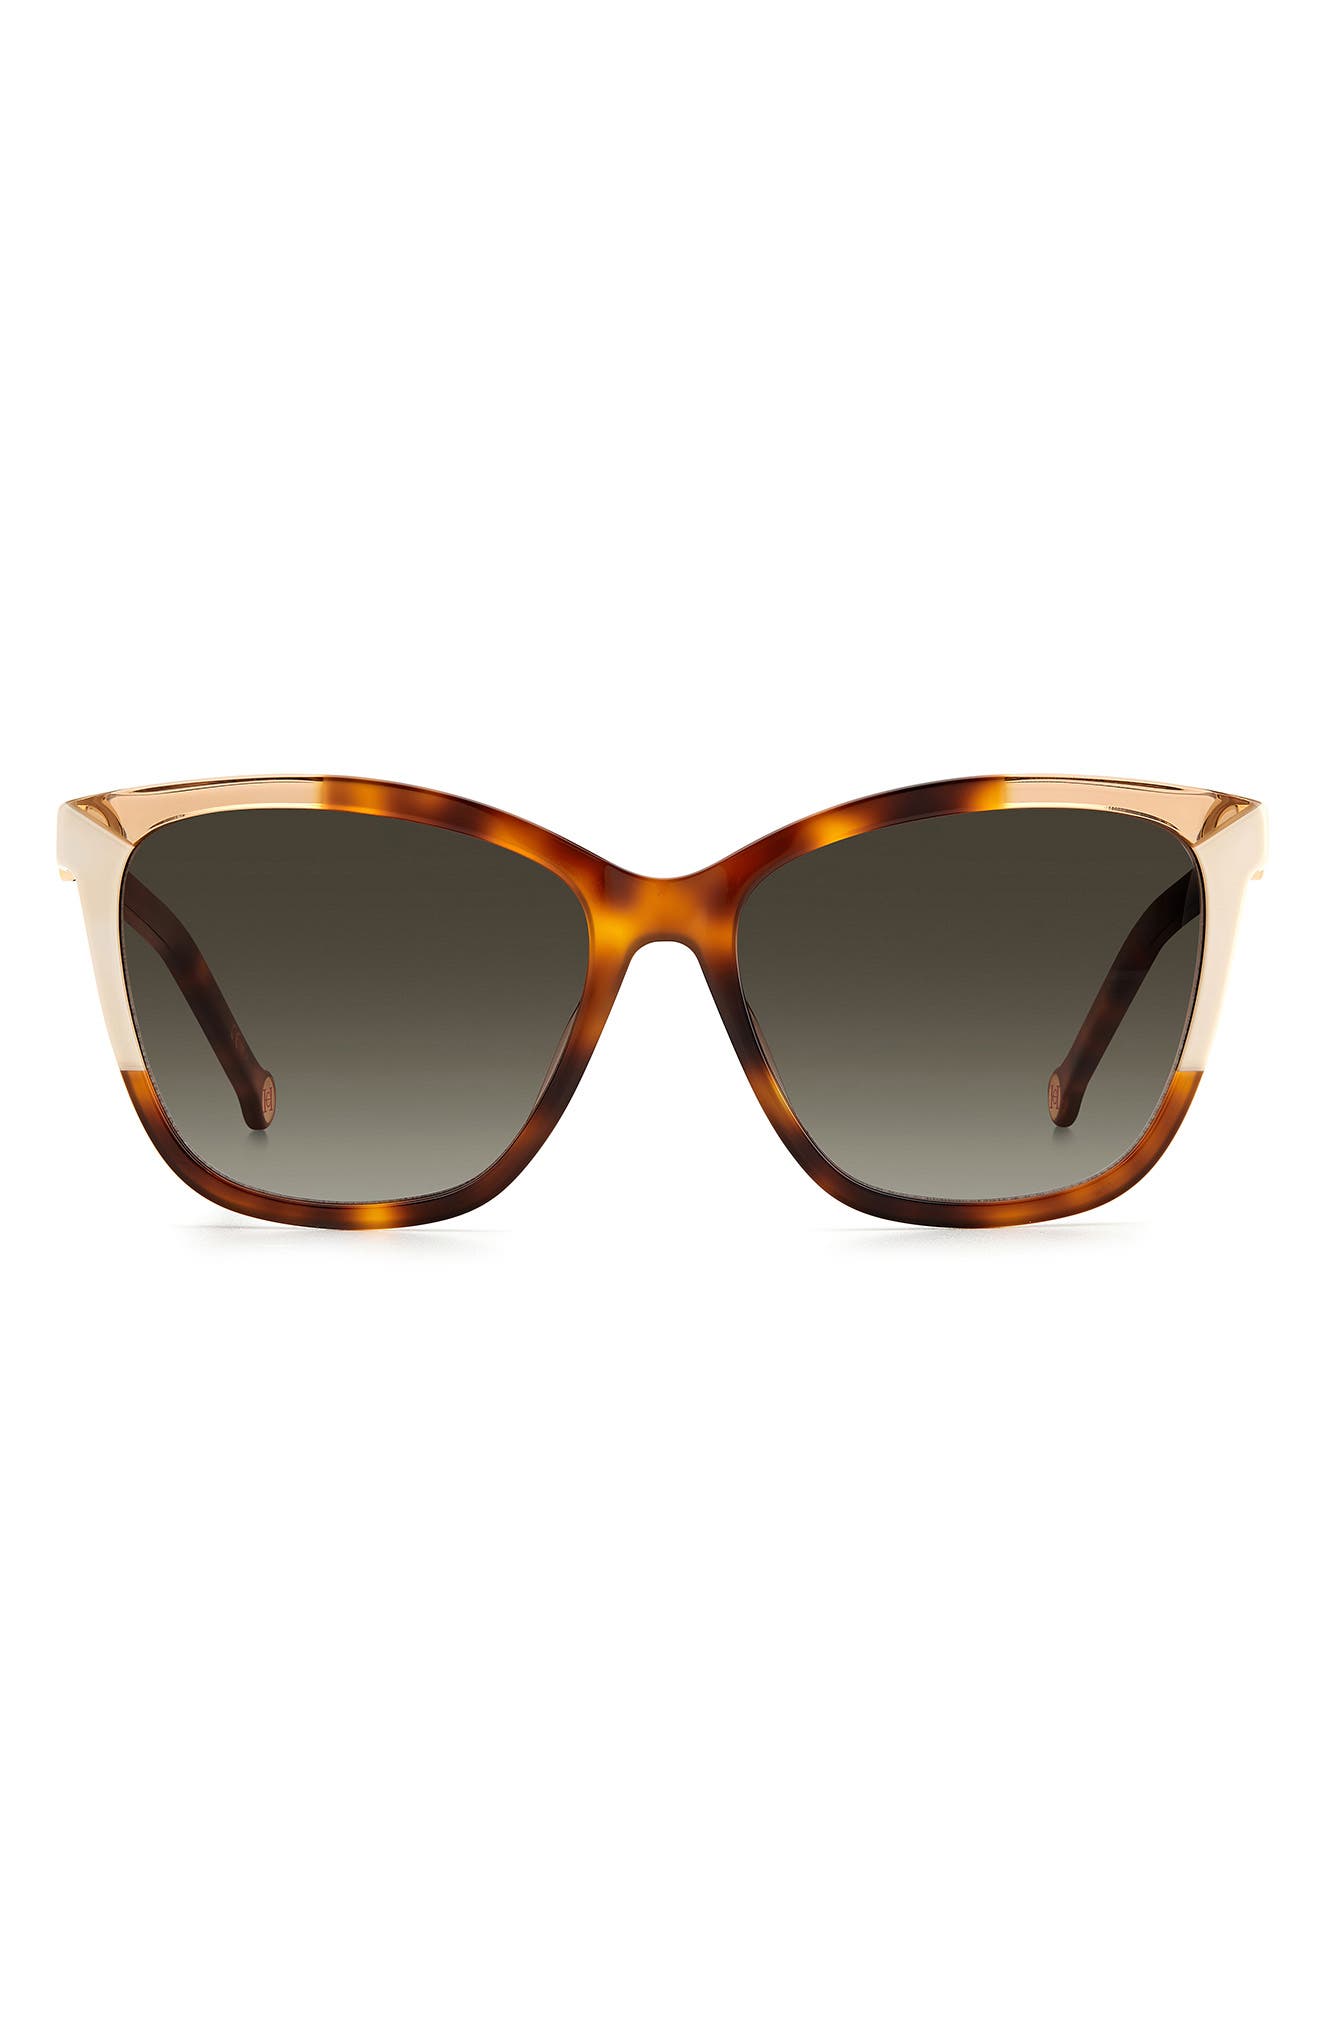 Carolina Herrera 58mm Rectangular Sunglasses in Havana Ivory /Brown at Nordstrom